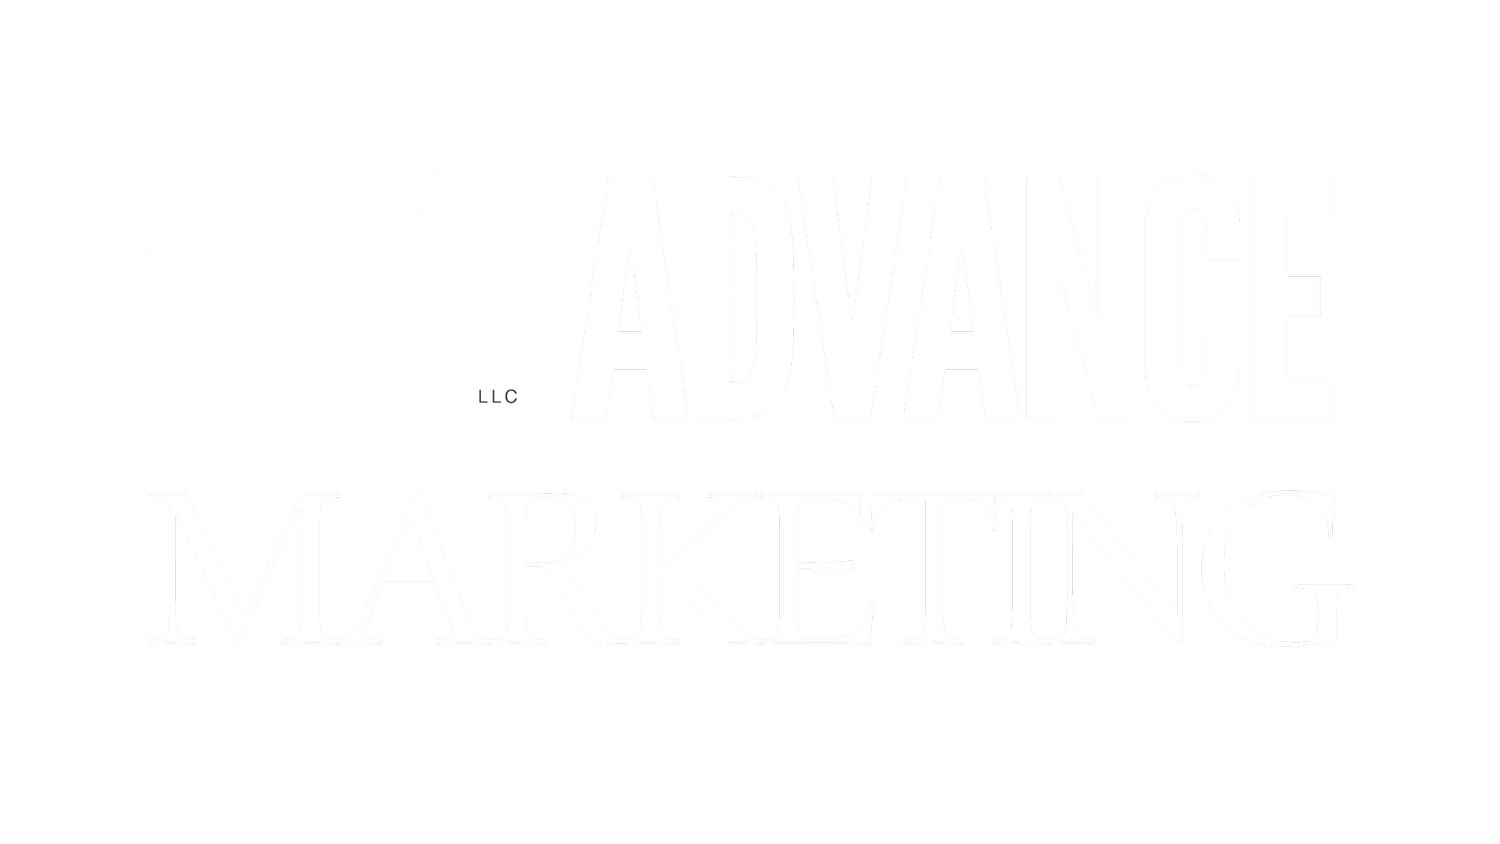 Advance Marketing by Jessica Velez